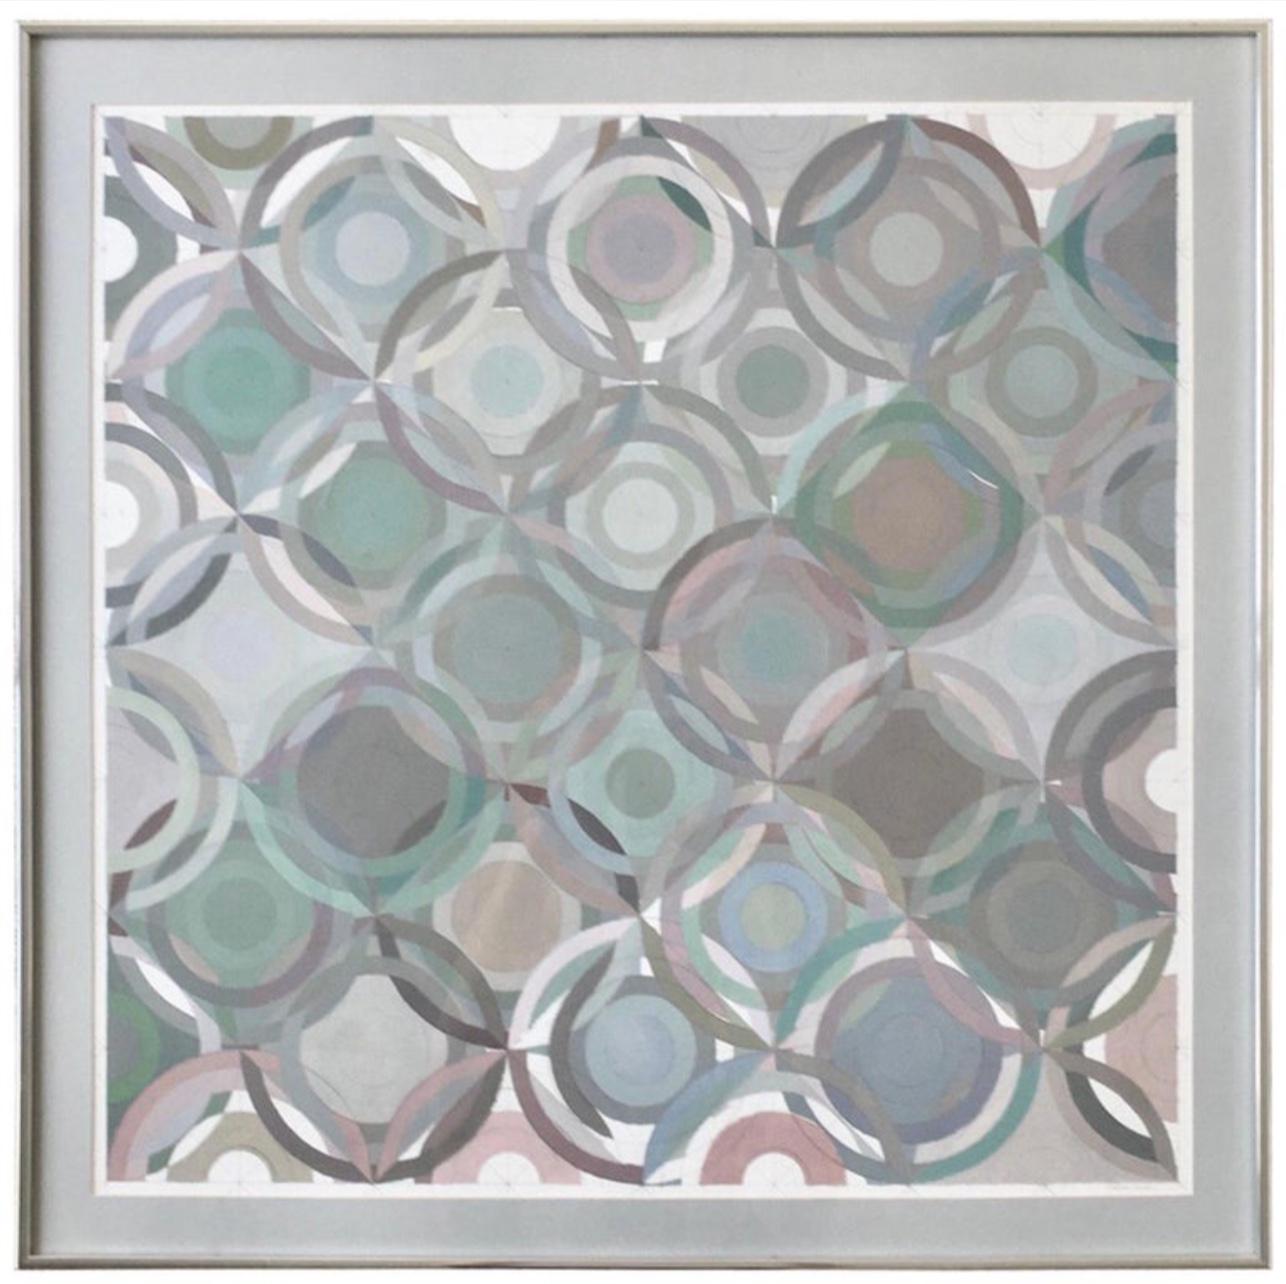 Framed abstract geometric gouache on paper by Stevan Kissel

Signed: Stevan Kissel

Los Angeles, CA.

Beautifully framed.